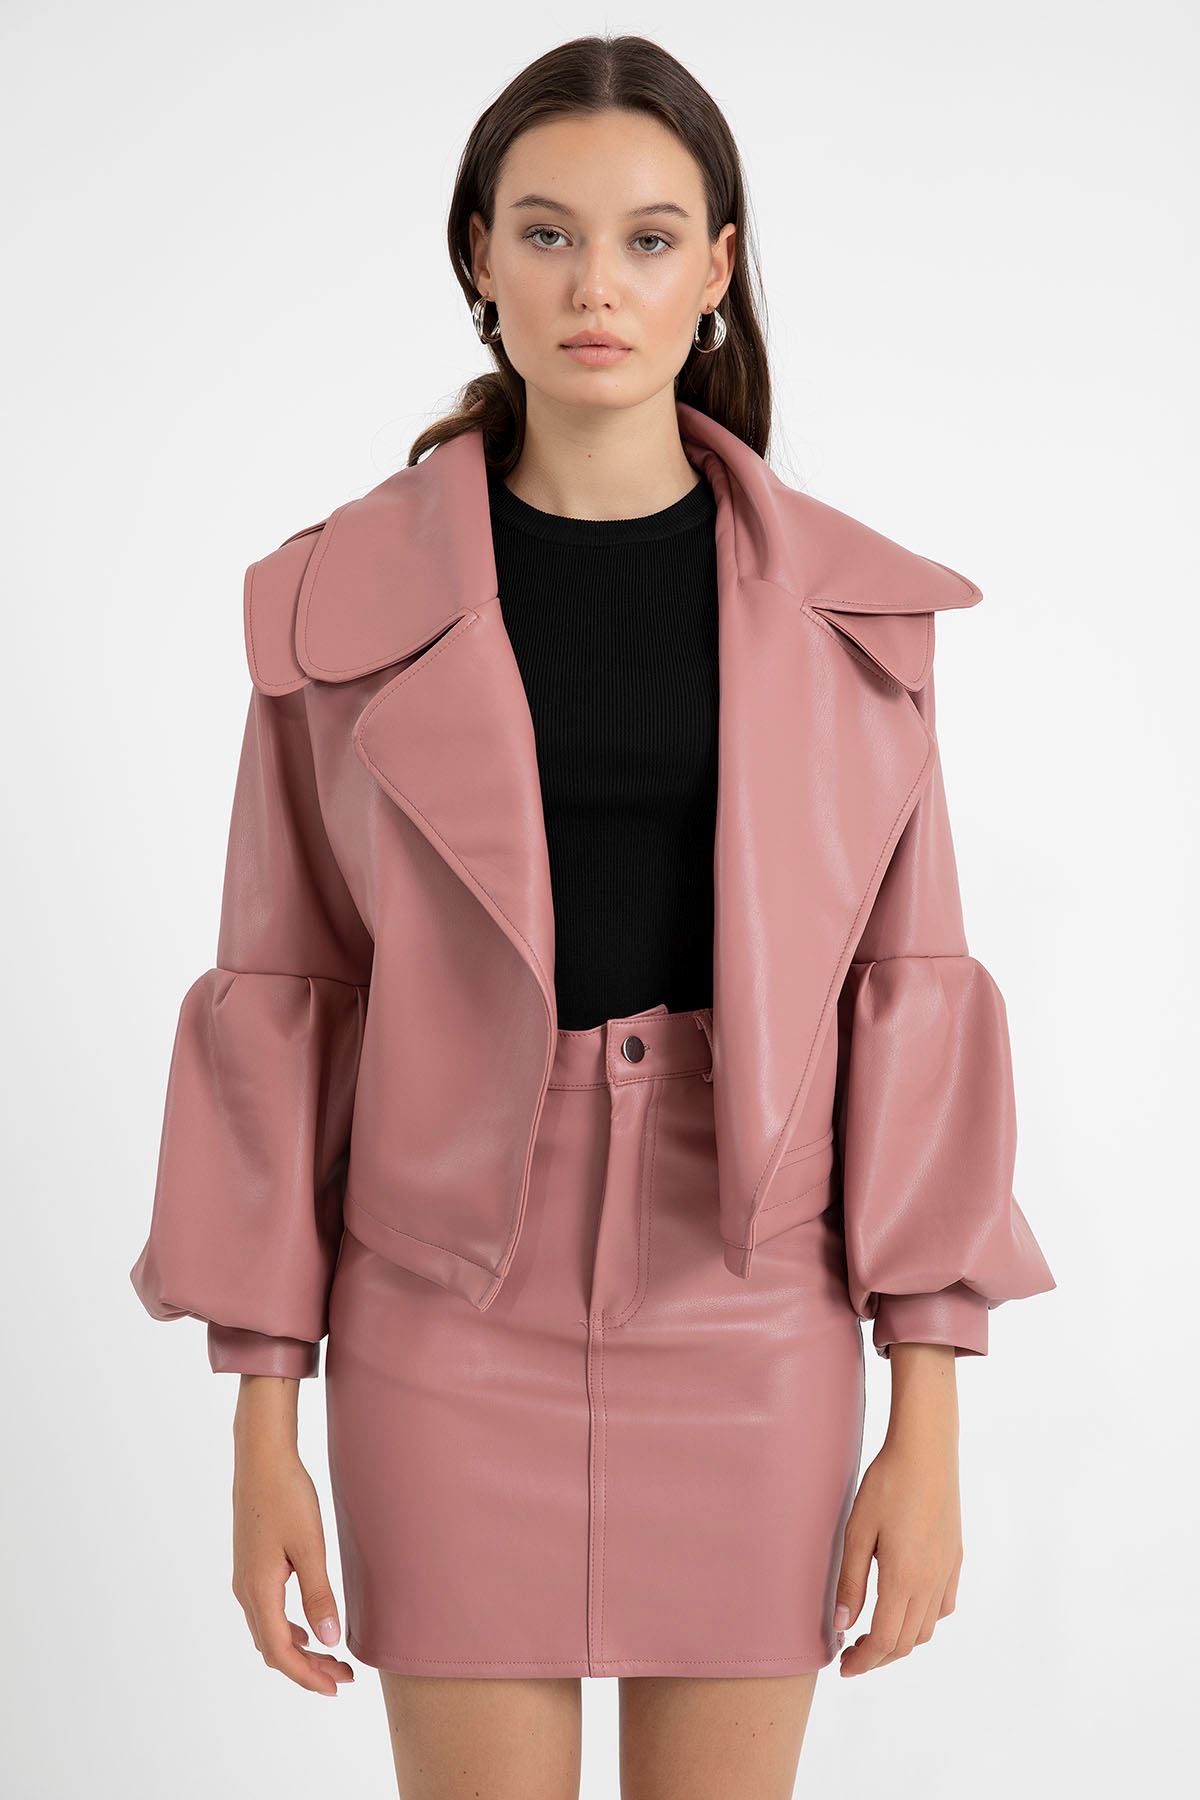 Leather Fabric Balloon Sleeve Revere Collar Oversize Women Jacket - Light Pink